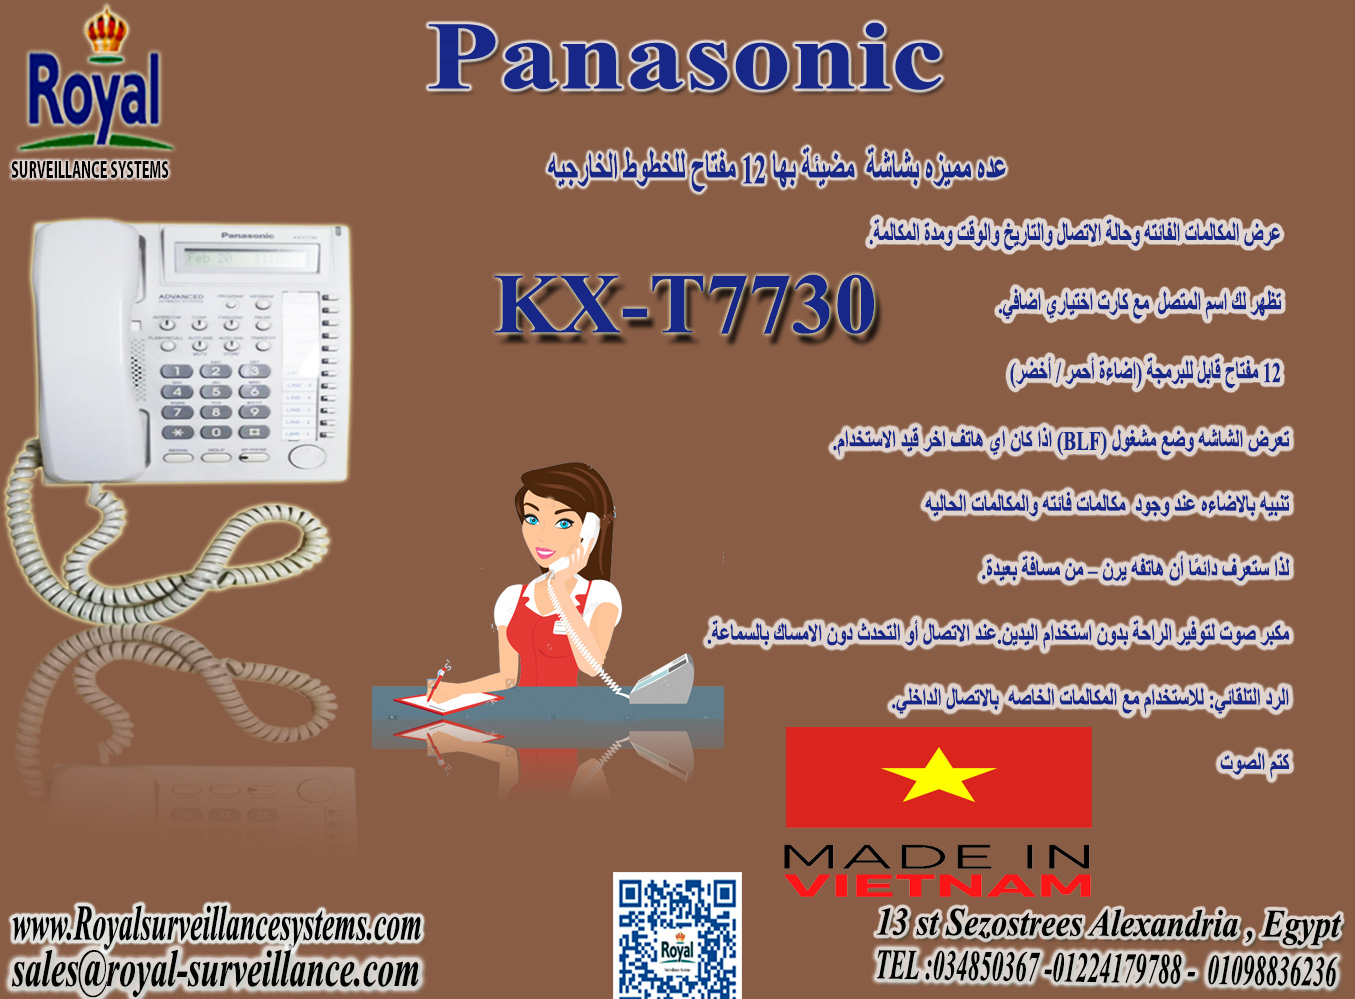  Panasonic KX-T7730 Corded Telephone KX-T7730 panasonic  في اسكندرية عدة مميزة بانسونيك هاتف ارضي